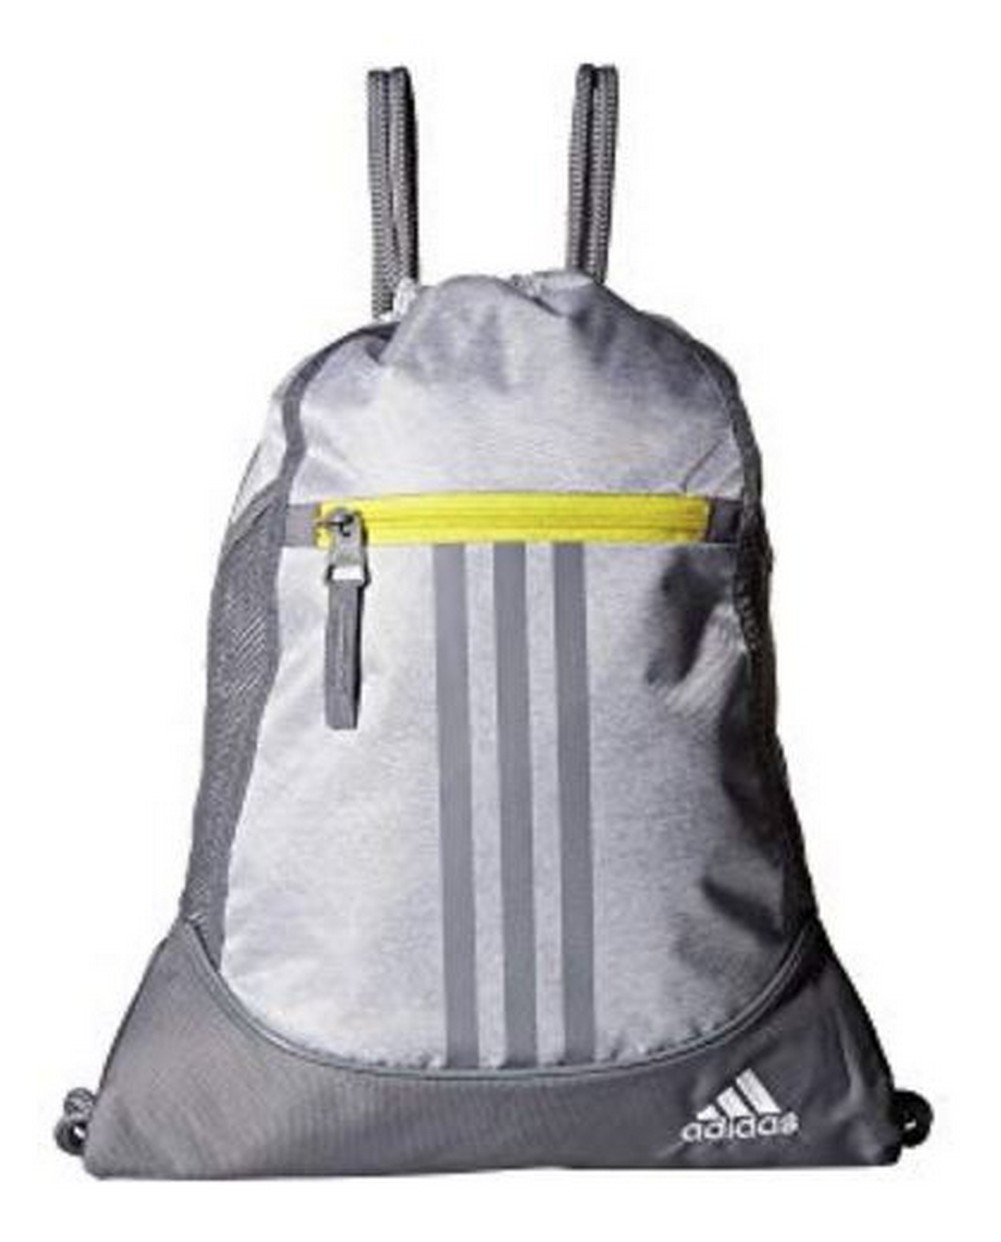 adidas backpack sling